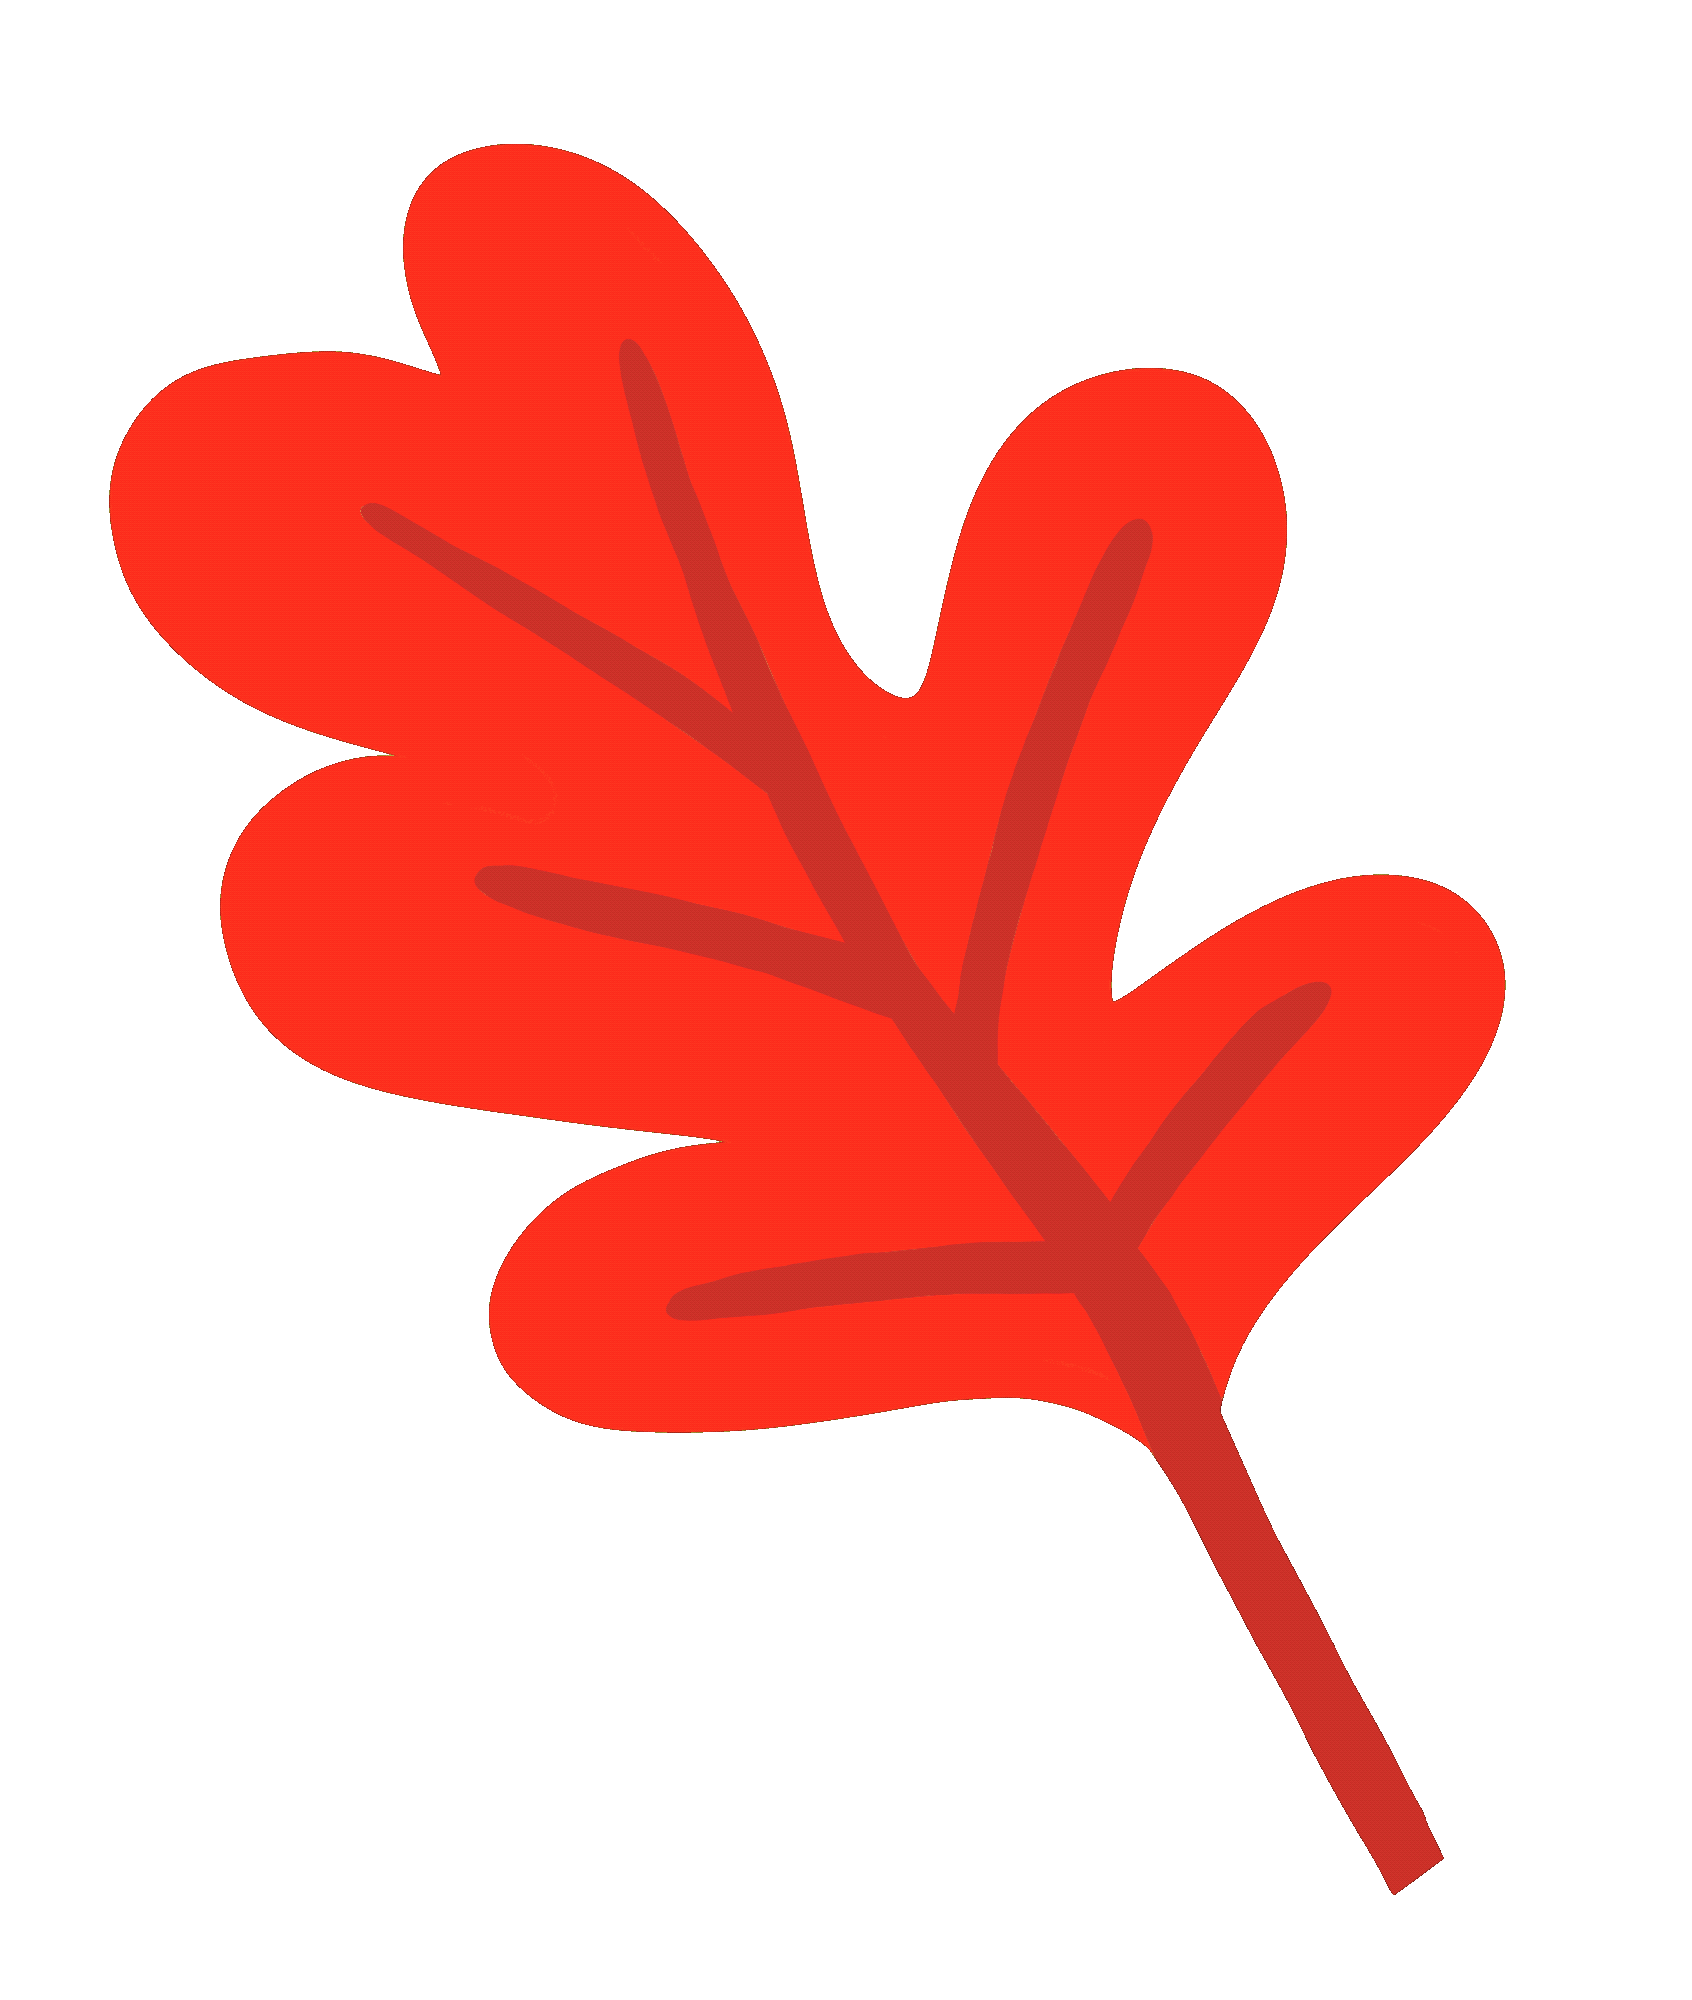 Nina Cosford Illustration - red leaf